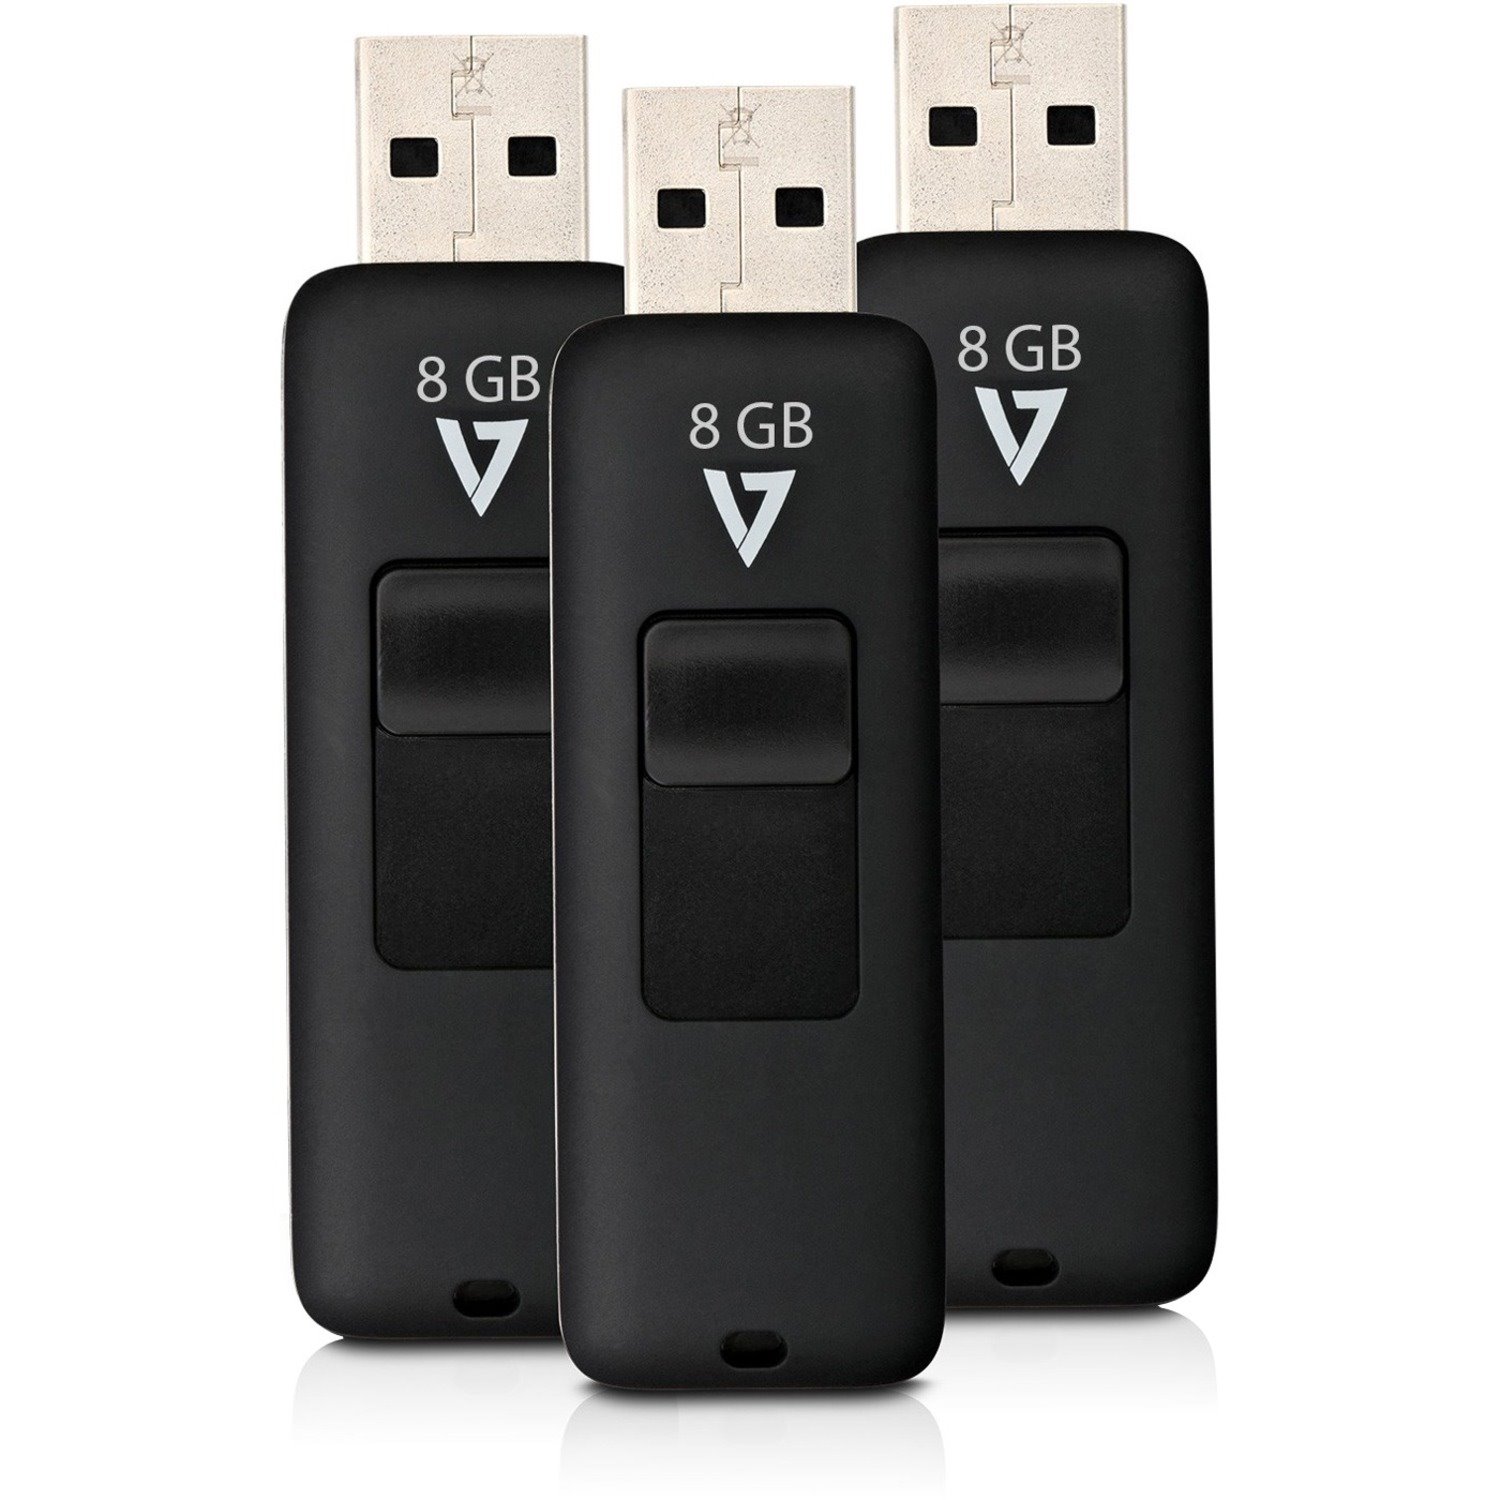 V7 8GB Flash Drive 3 Pack Combo